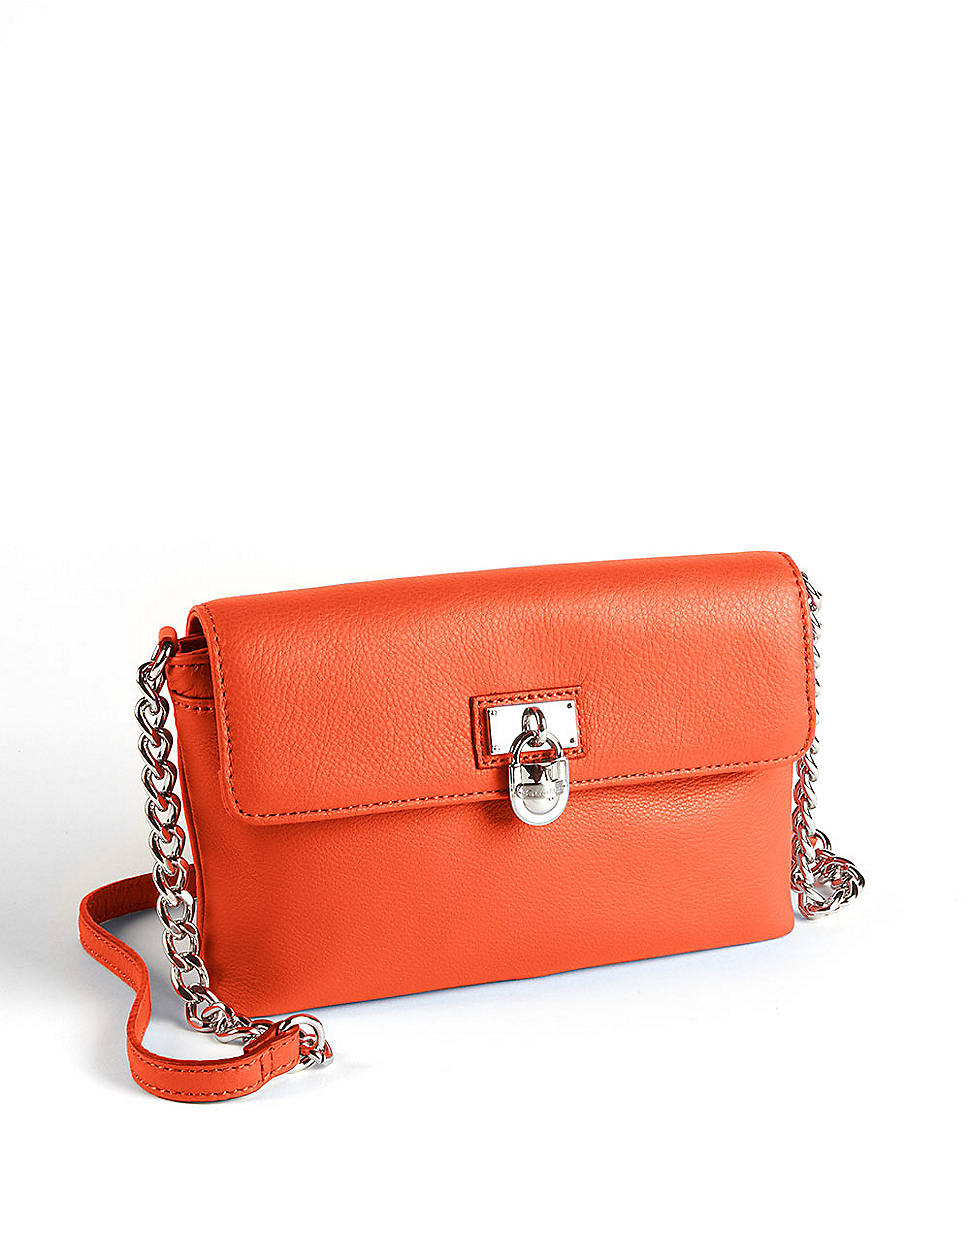 Calvin Klein Leather Crossbody Bag in Orange (terracota) | Lyst